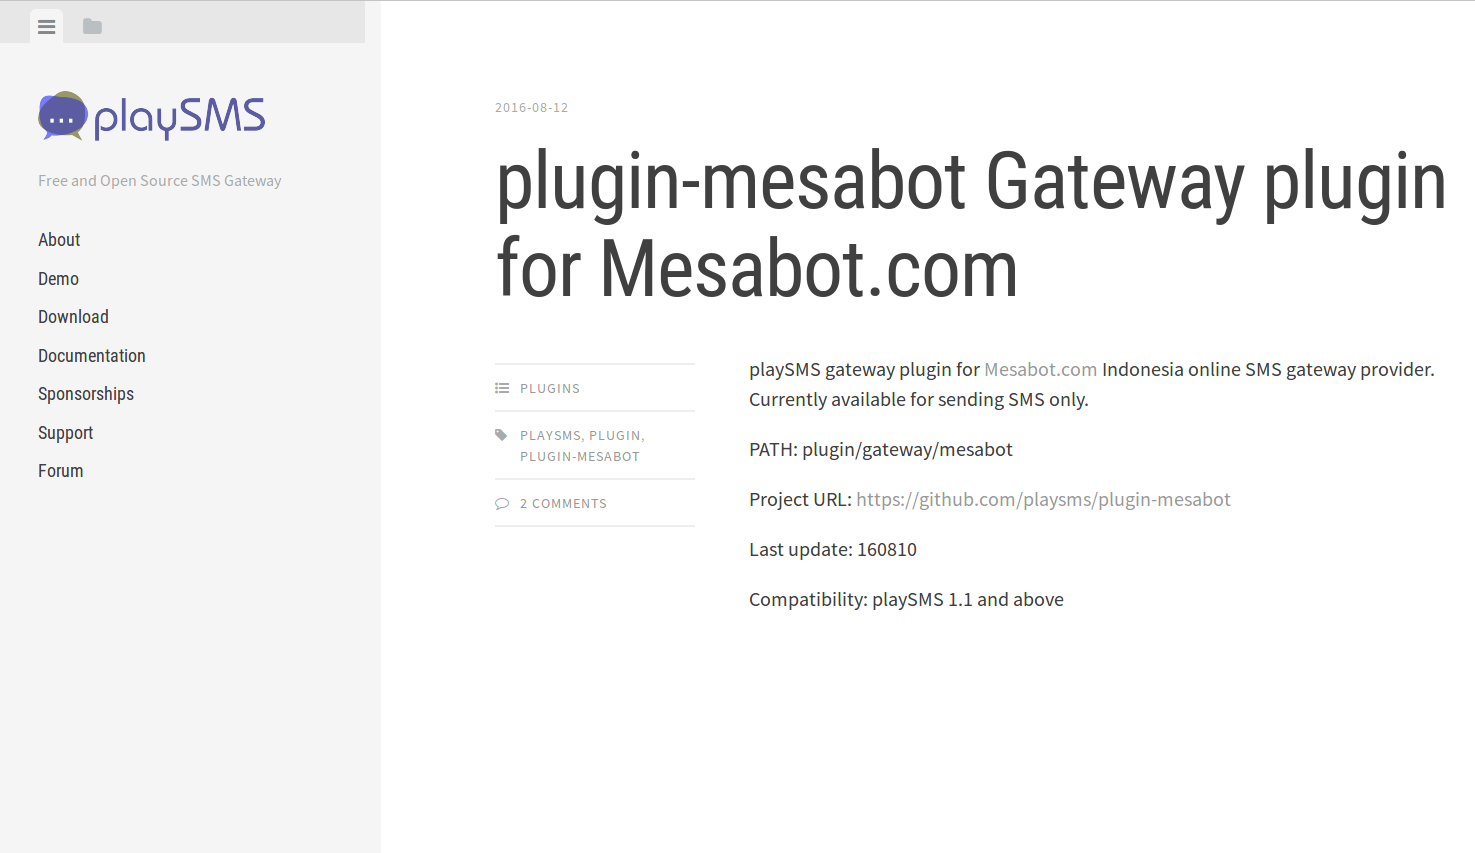 PlaySMS-SMS Gateway